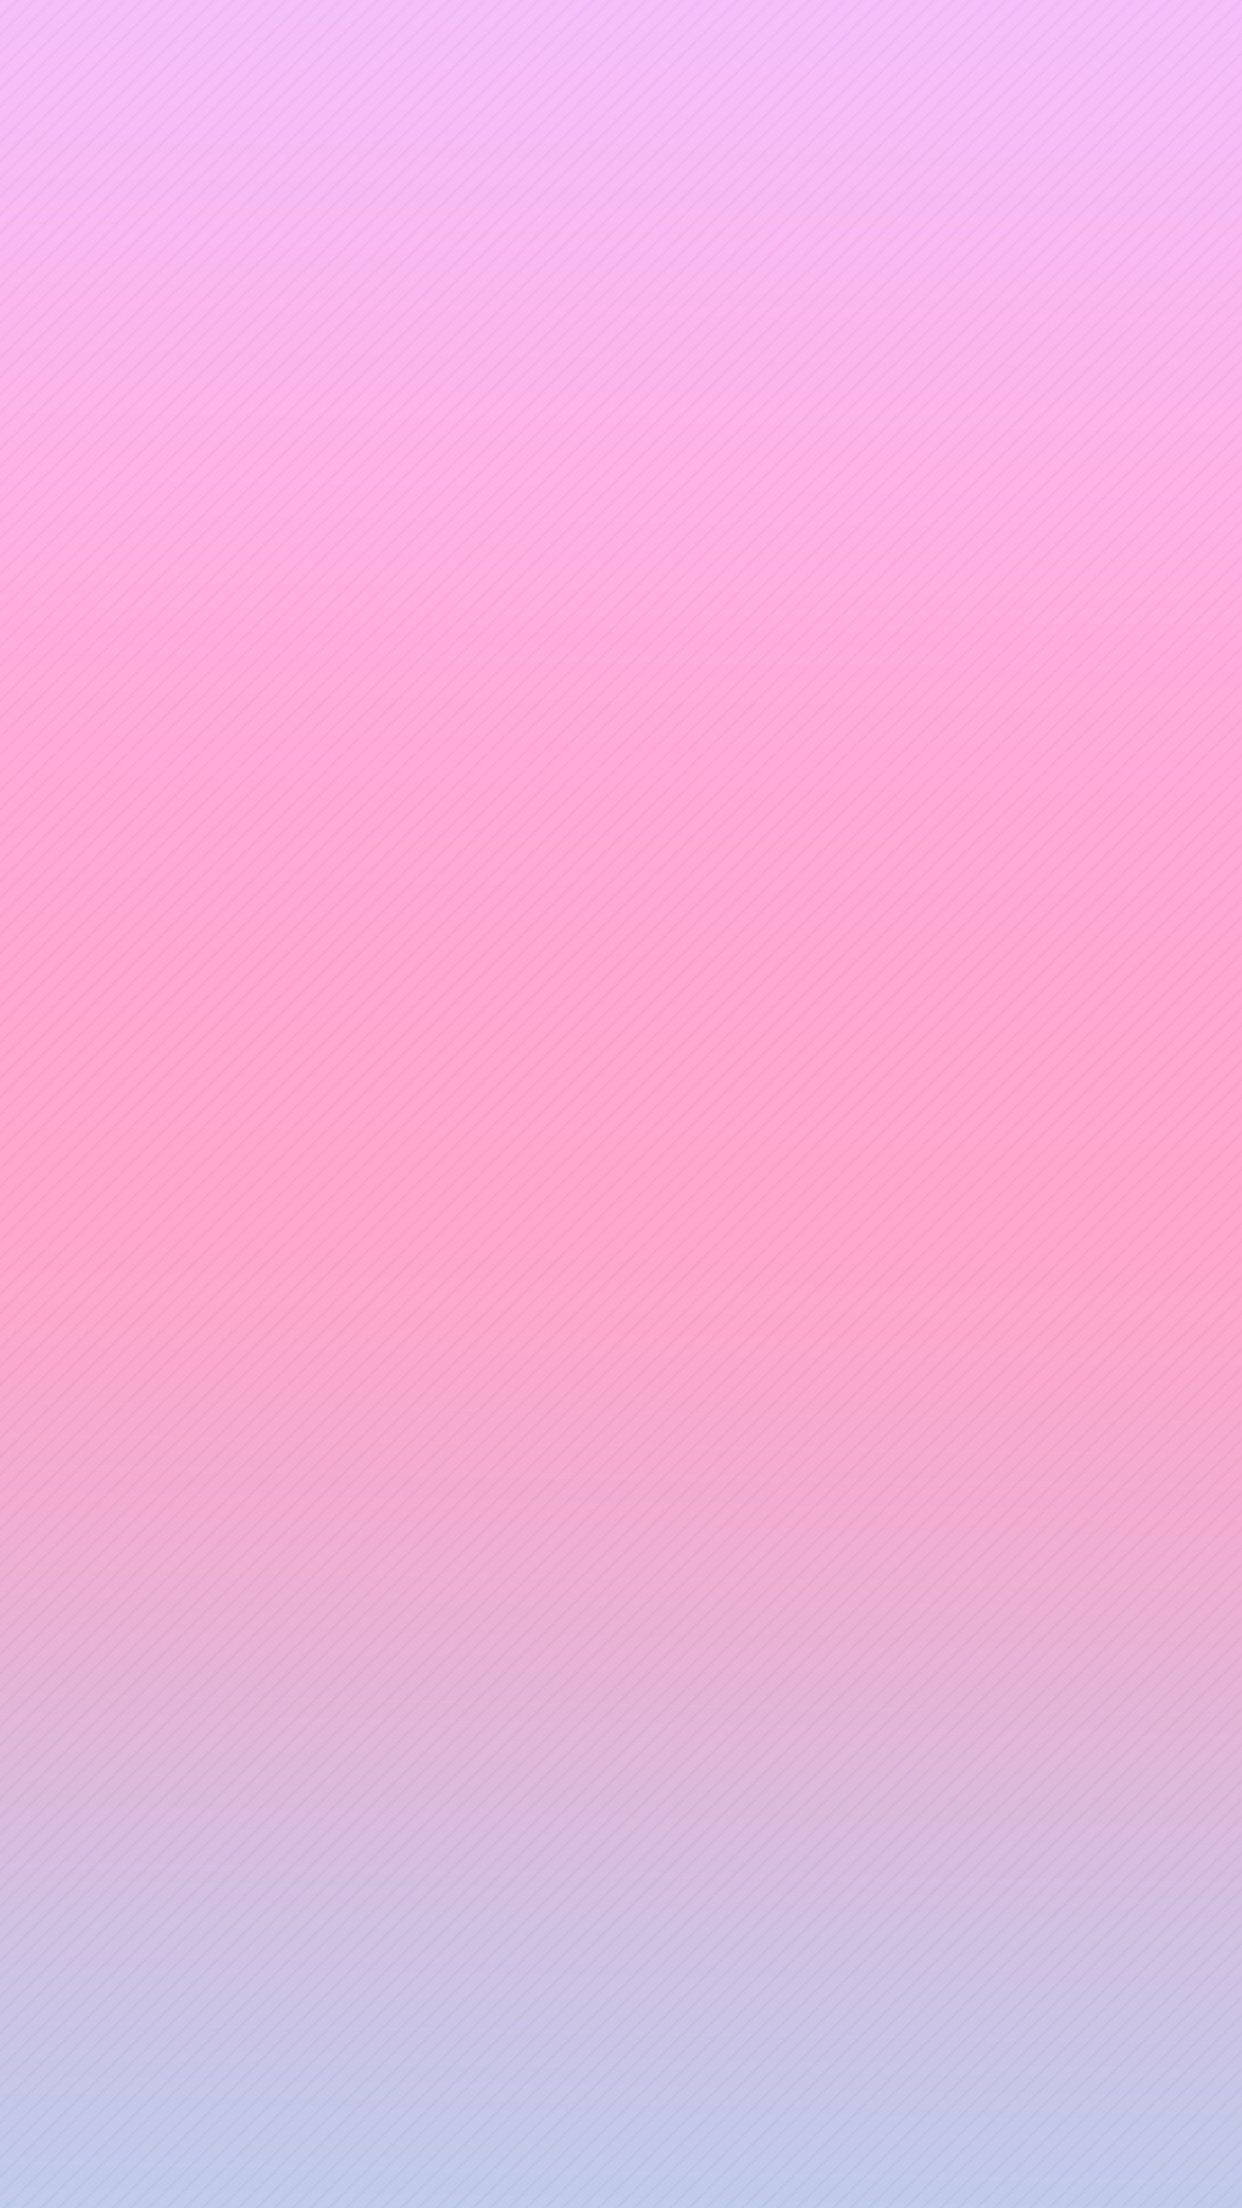 ombre fondo de pantalla para iphone,rosado,violeta,púrpura,lila,cielo